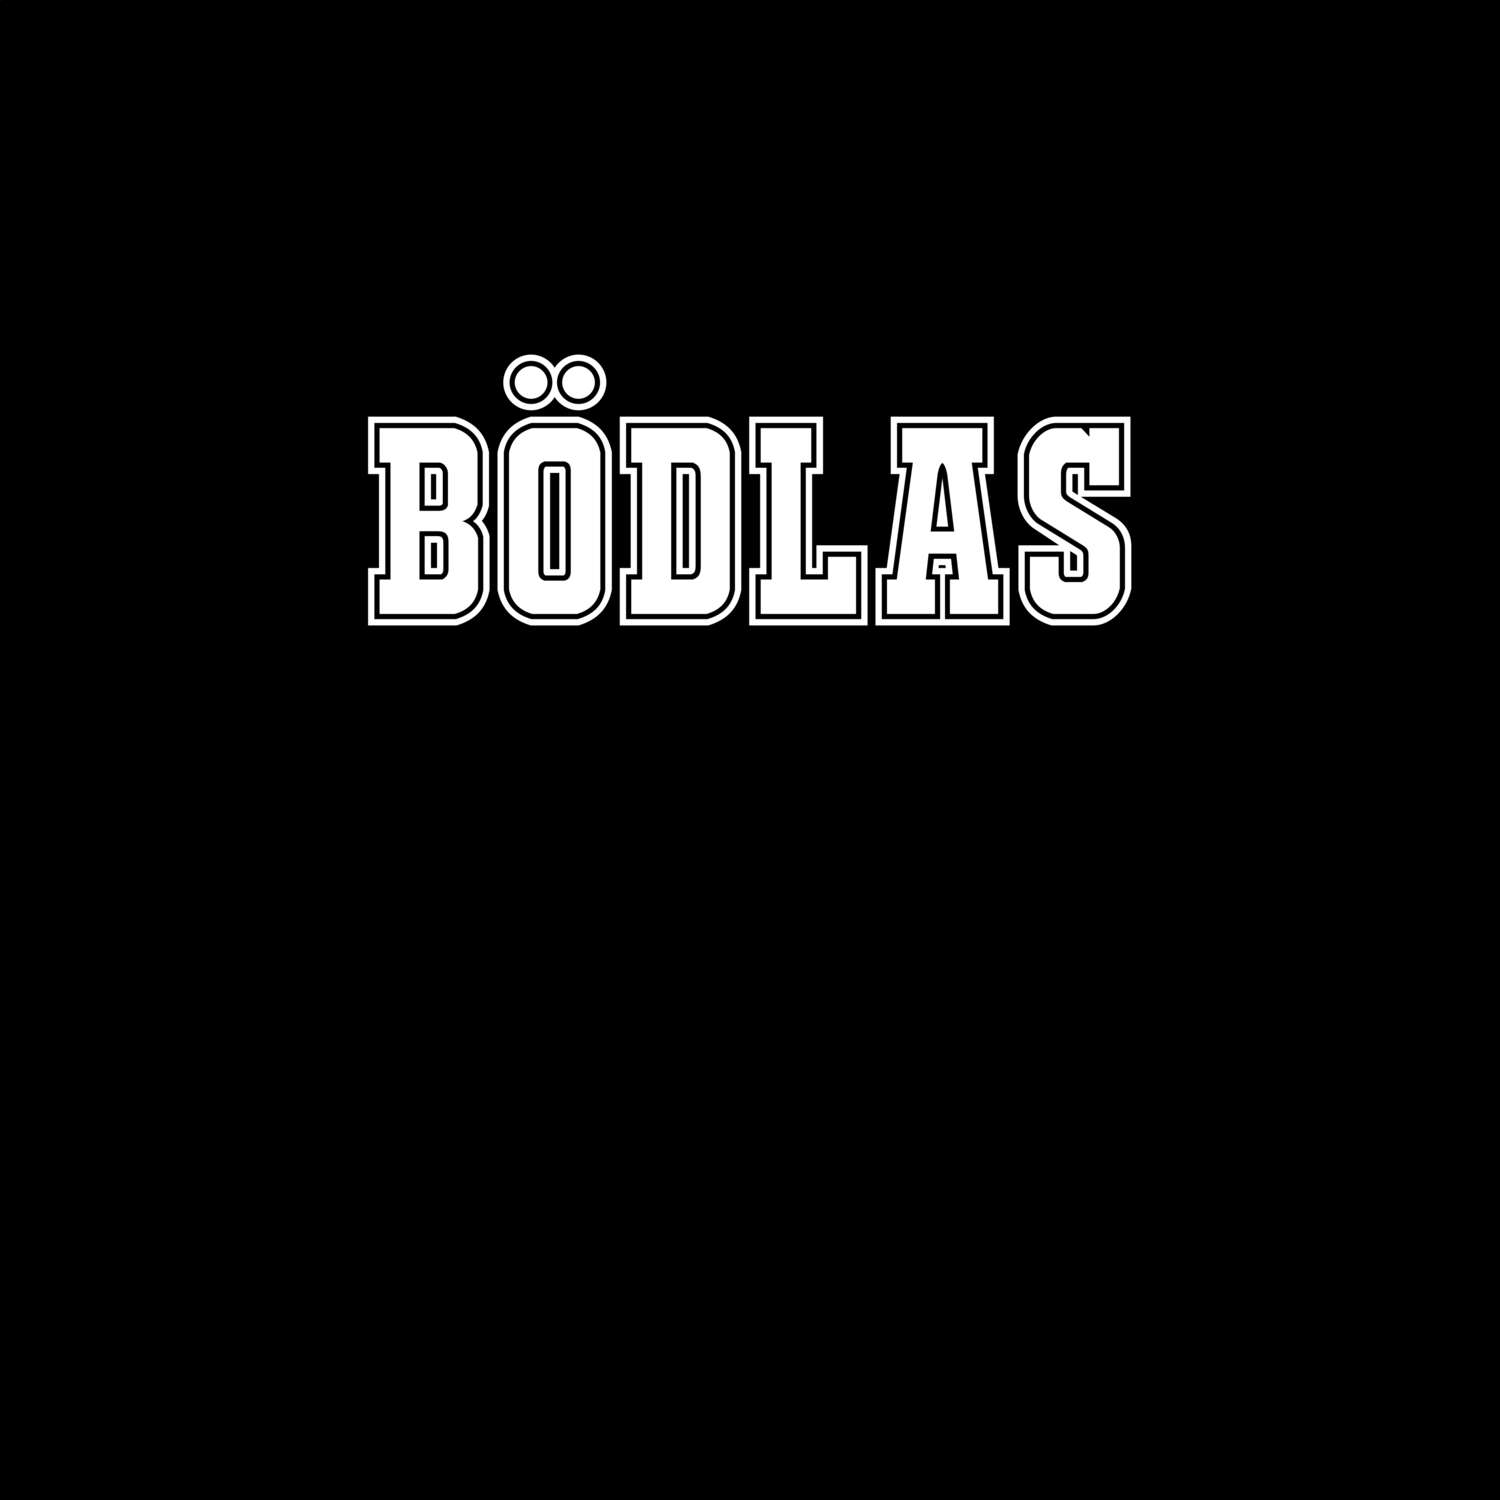 Bödlas T-Shirt »Classic«